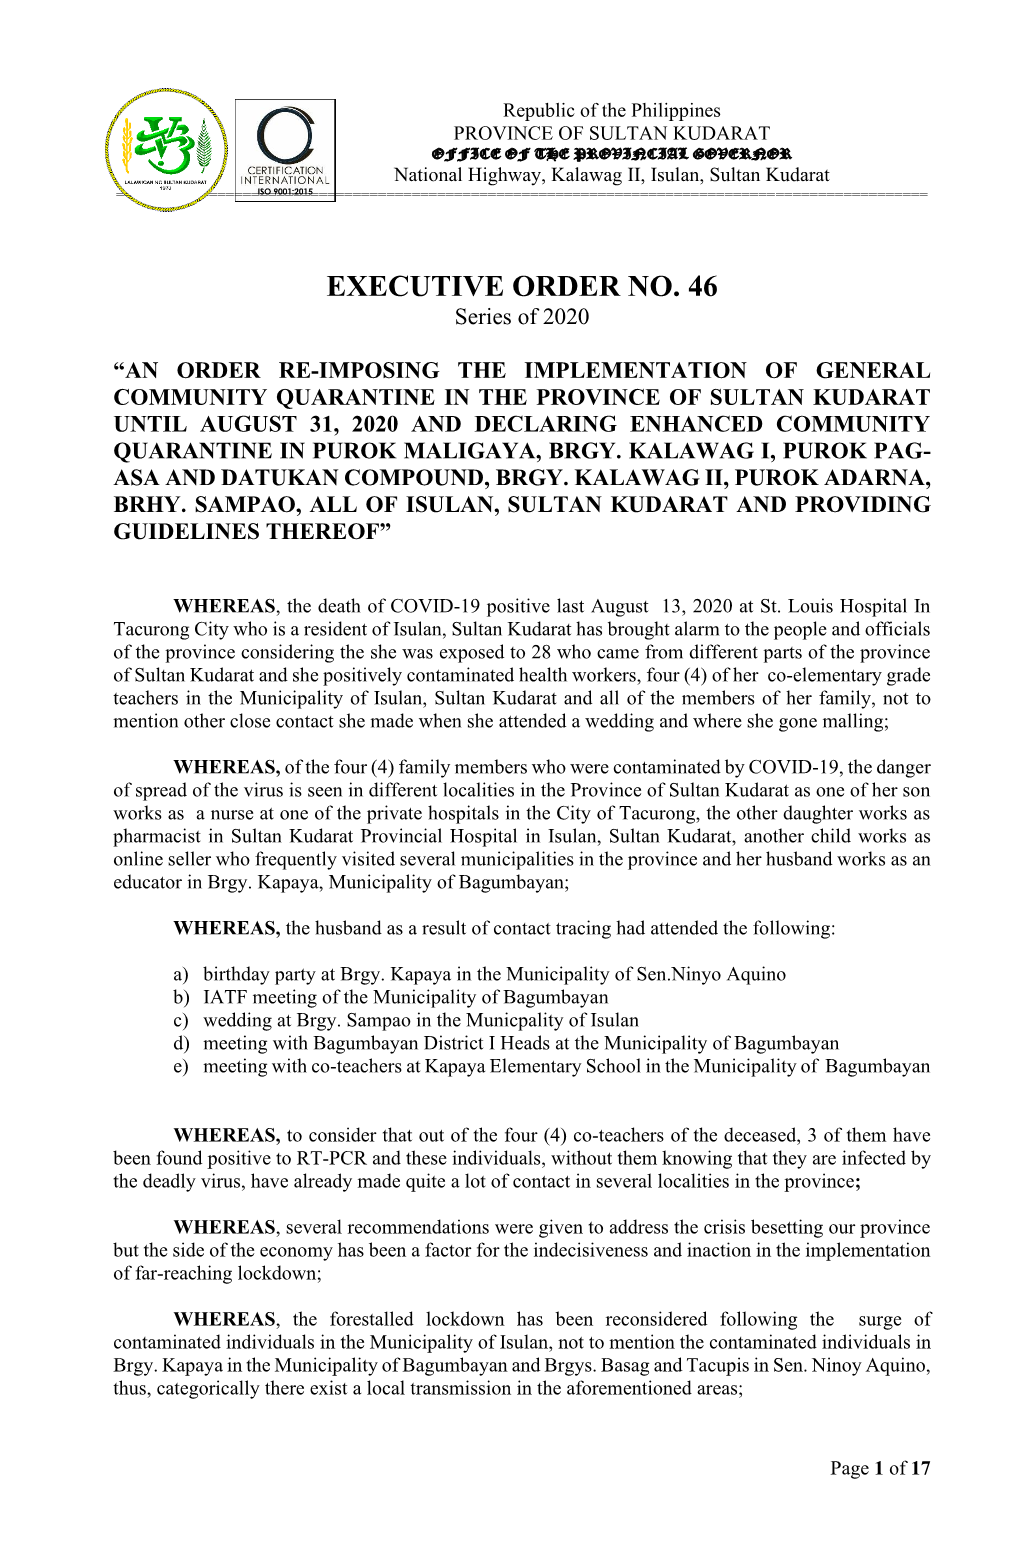 Executive Order No. 46, Series of 2020